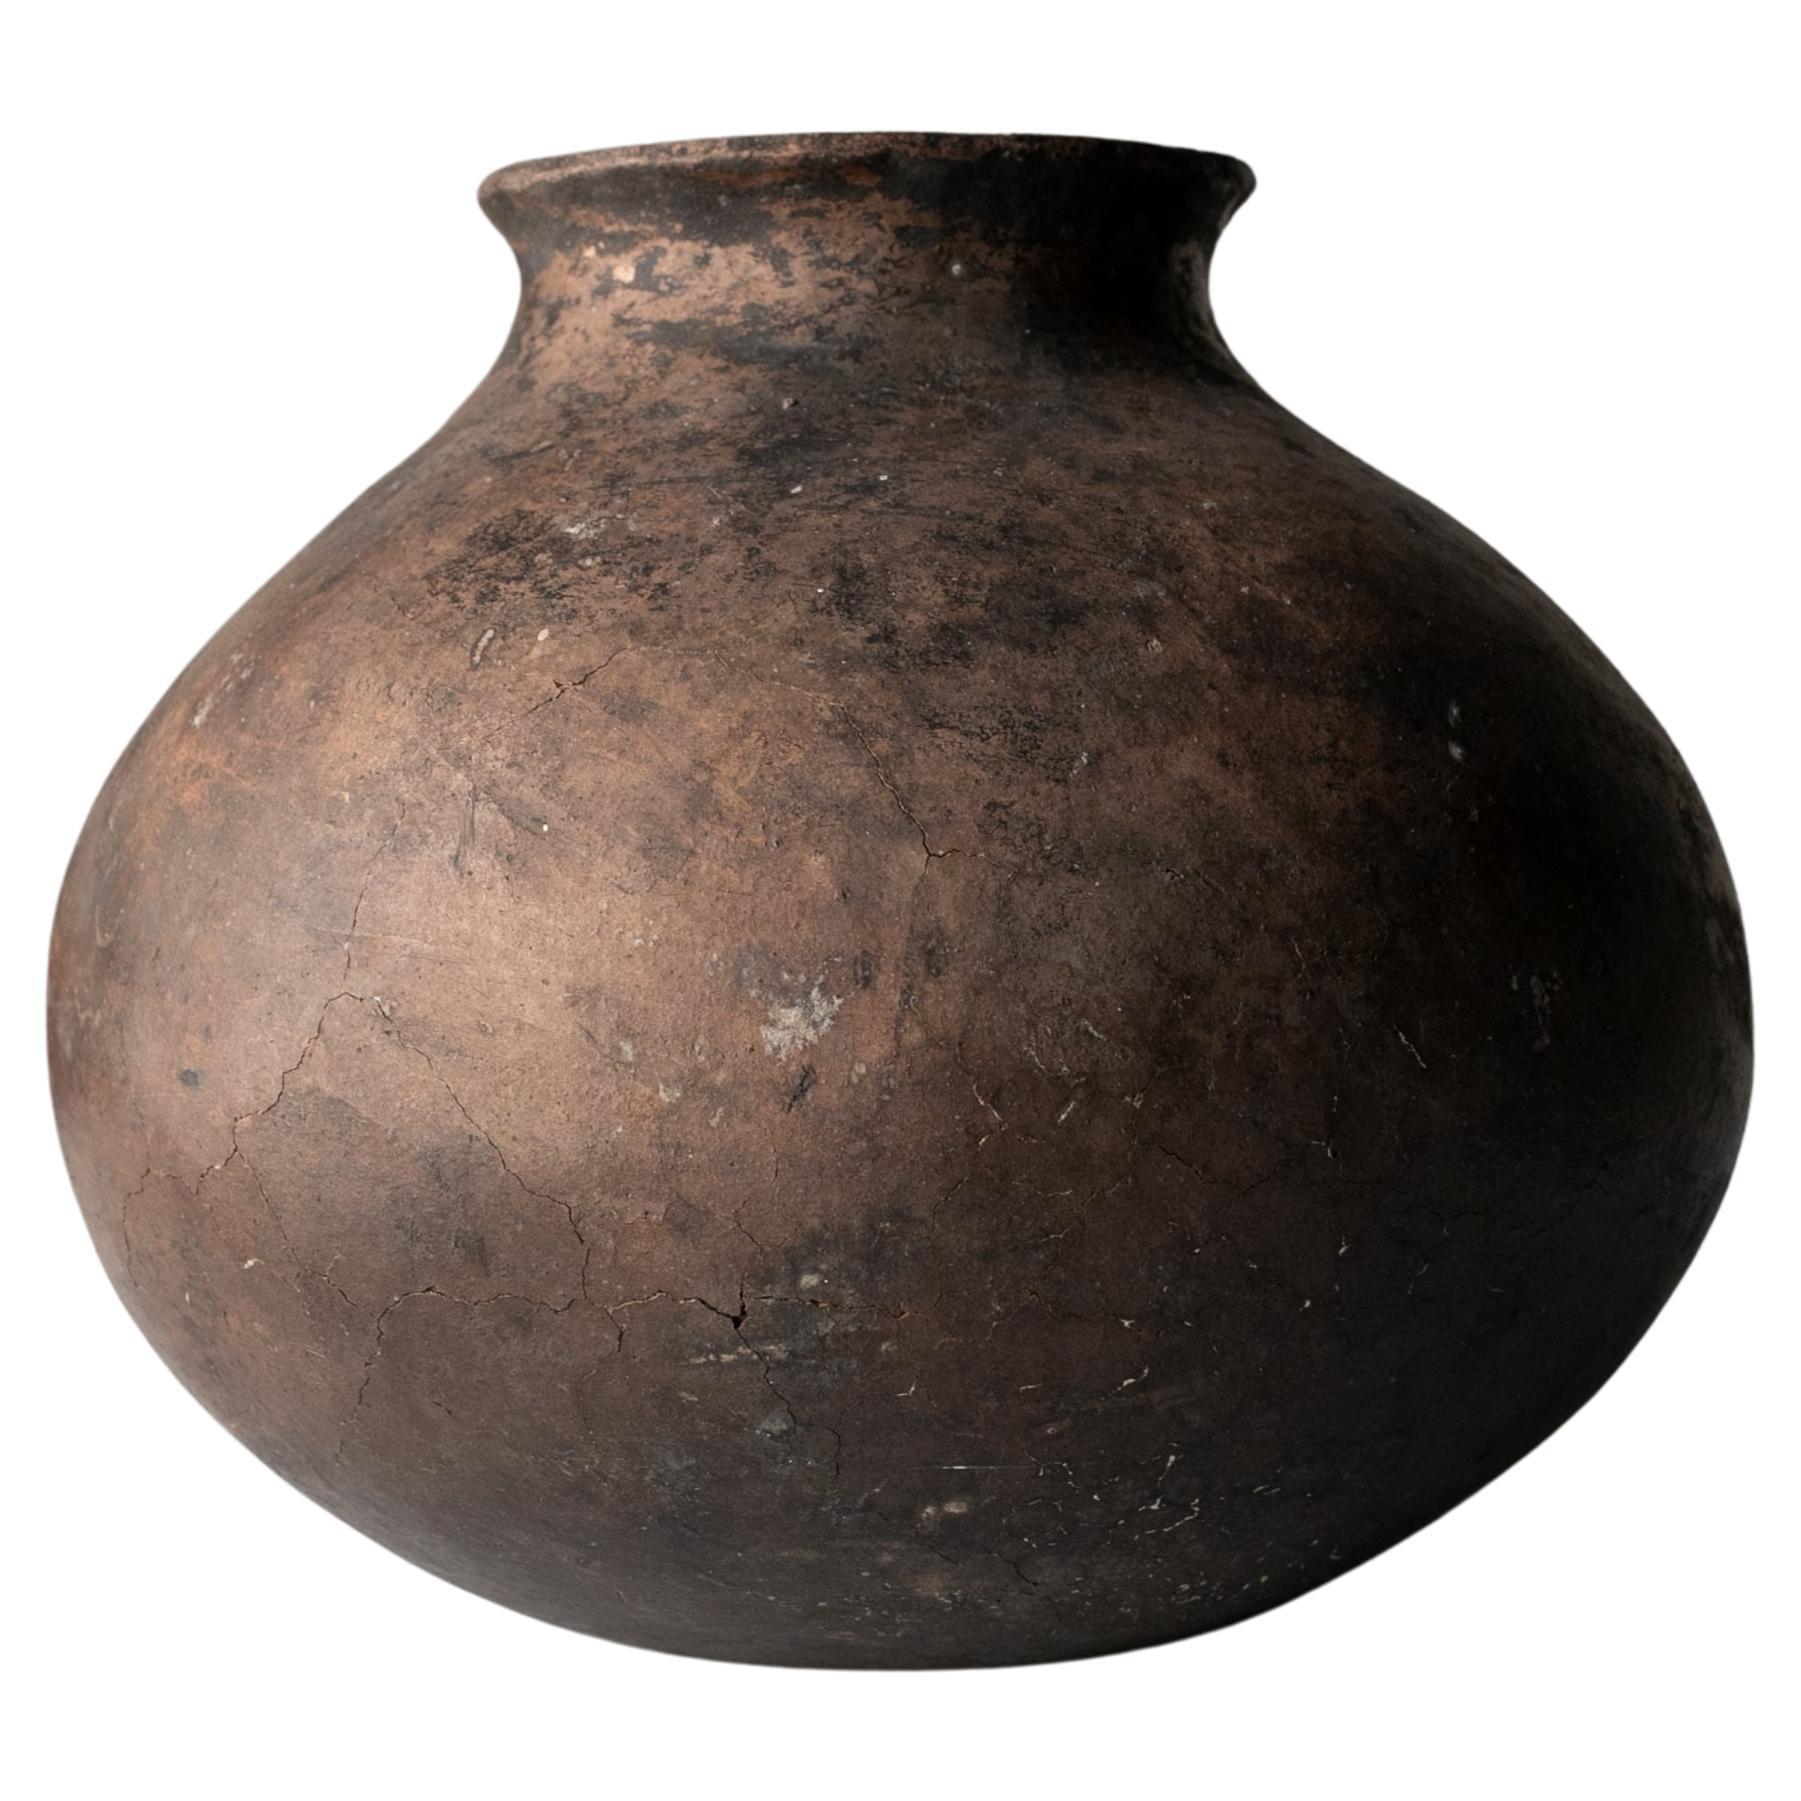 Beautifully shaped black earthenware/16th-17th century/Wabi-sabi vase For Sale